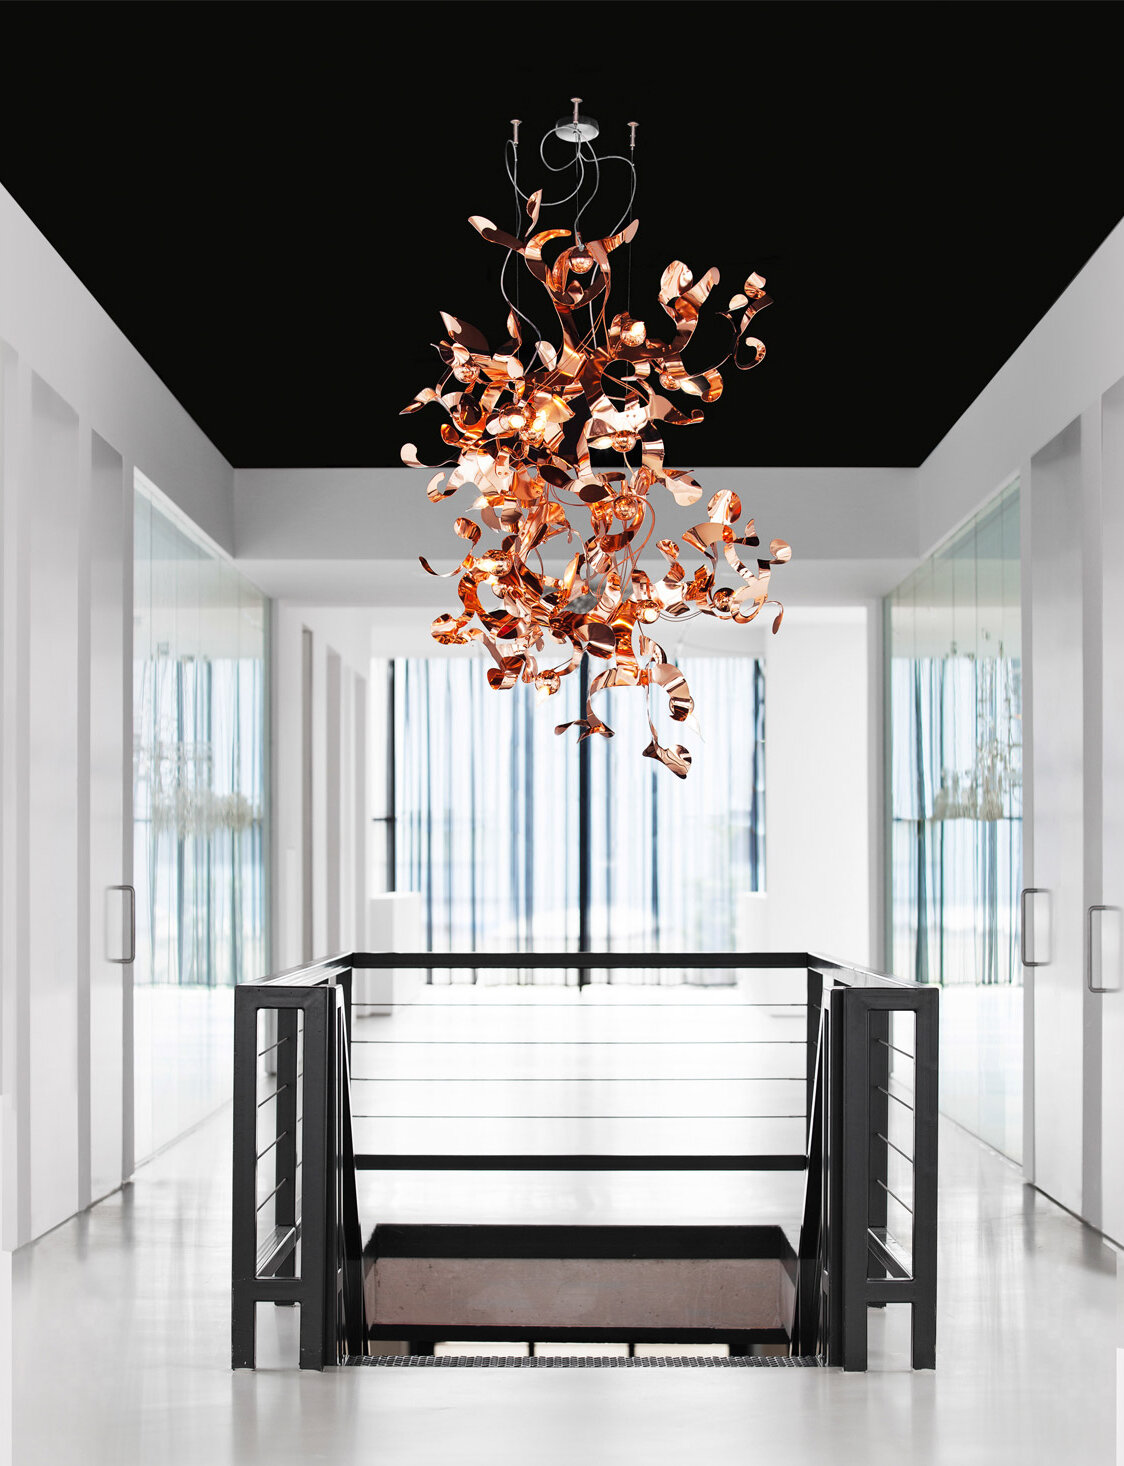 kelp-element-collection-handmade-lighting-design-office-interior-lighting-562x733@2x.jpg